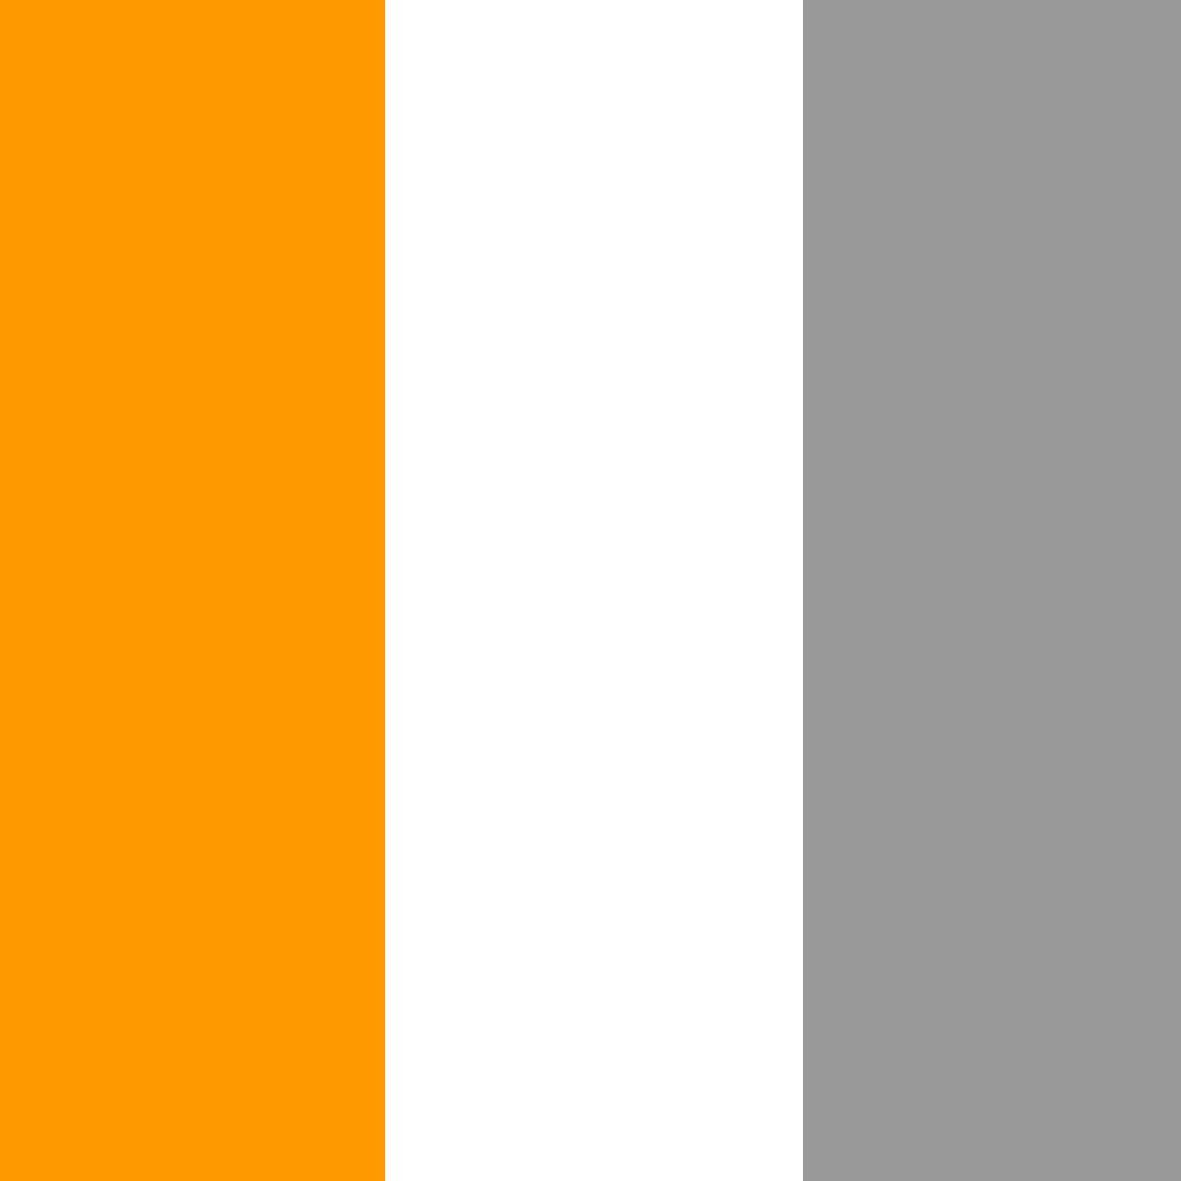 оранжевый/белый/серый_FF9900/FFFFFF/999999